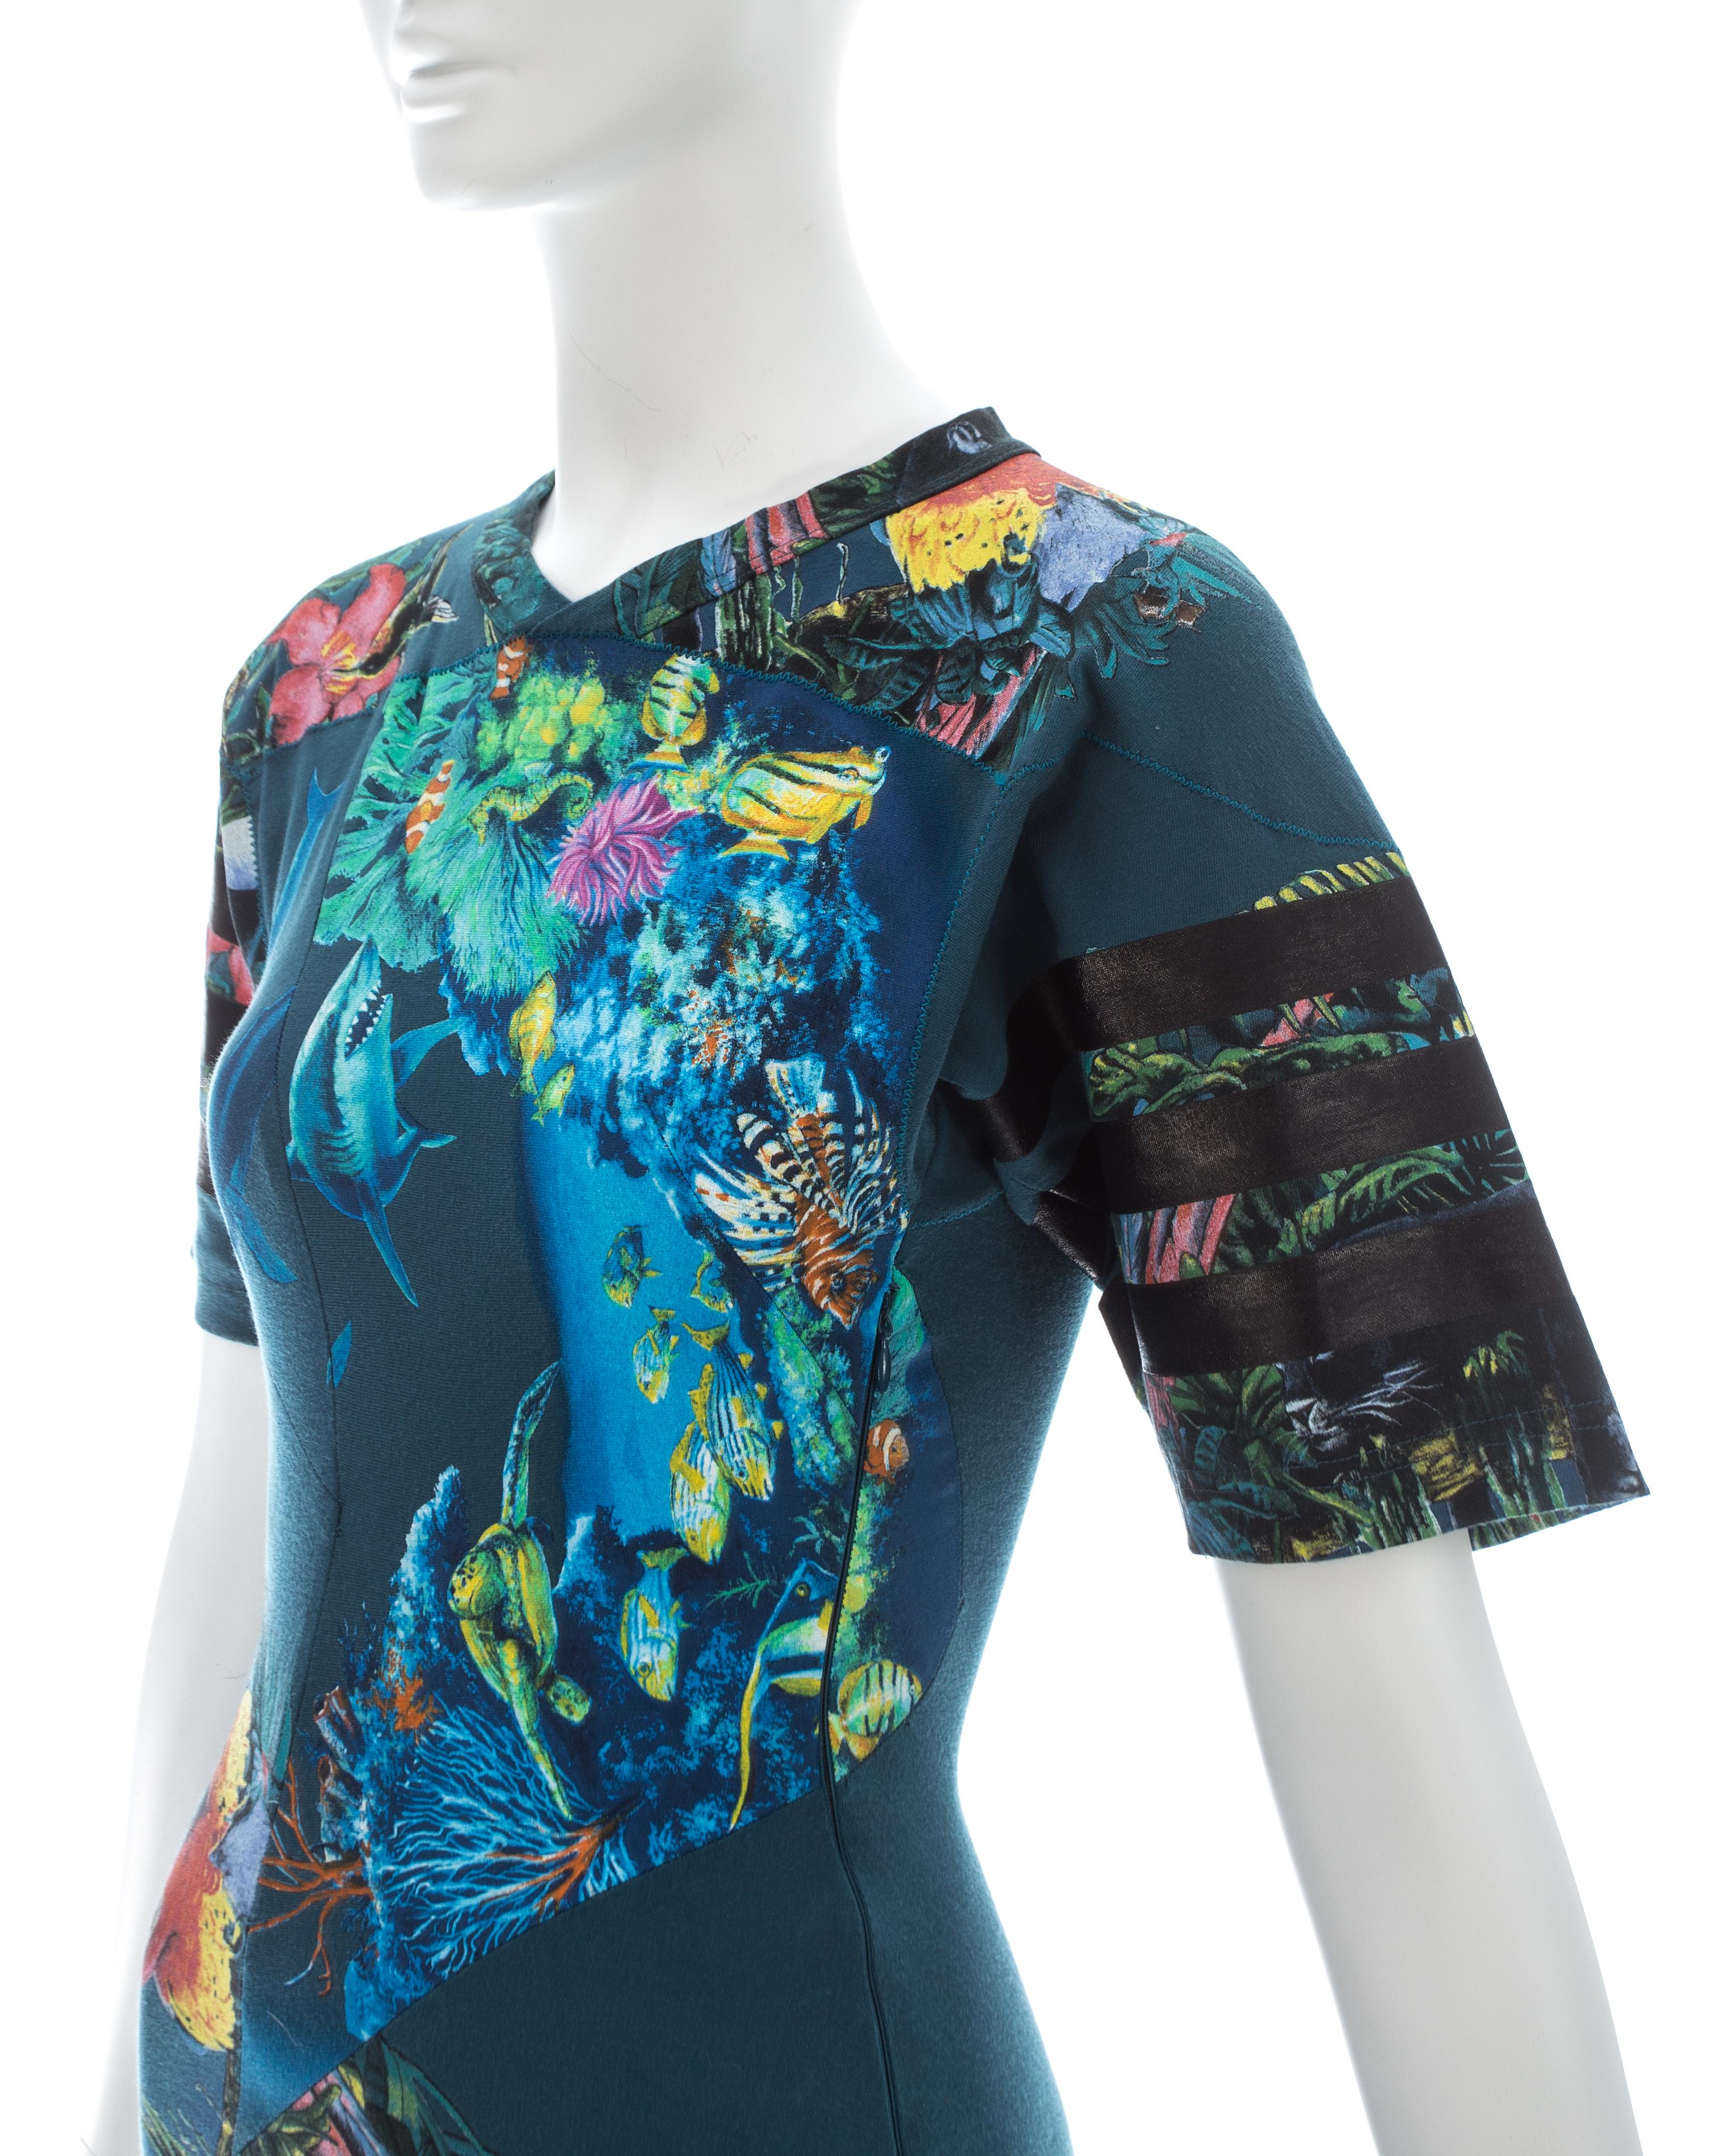 Balenciaga teal cotton mini dress with aquatic and jungle themed print, ss 2003 1